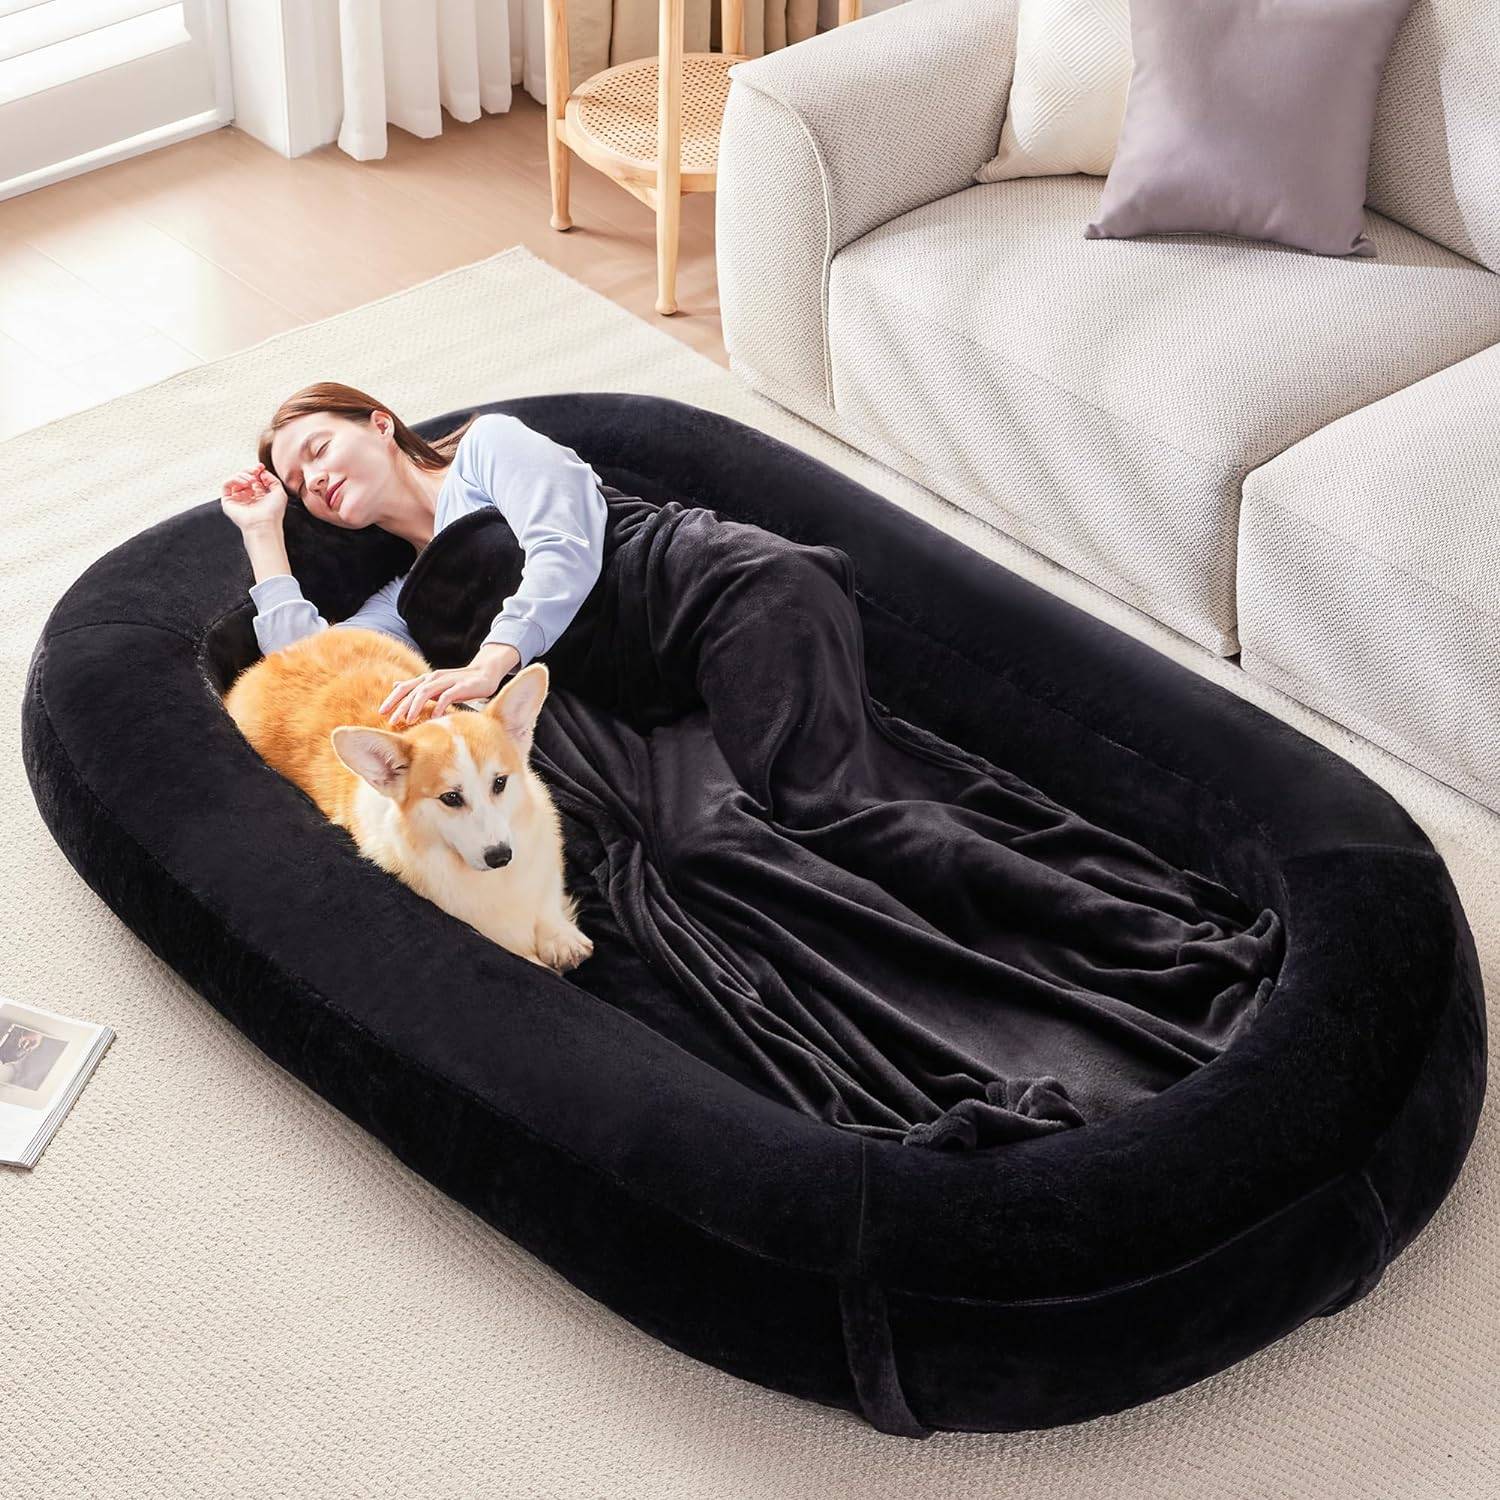 black human dog bed with woman and corgi sleeping in it